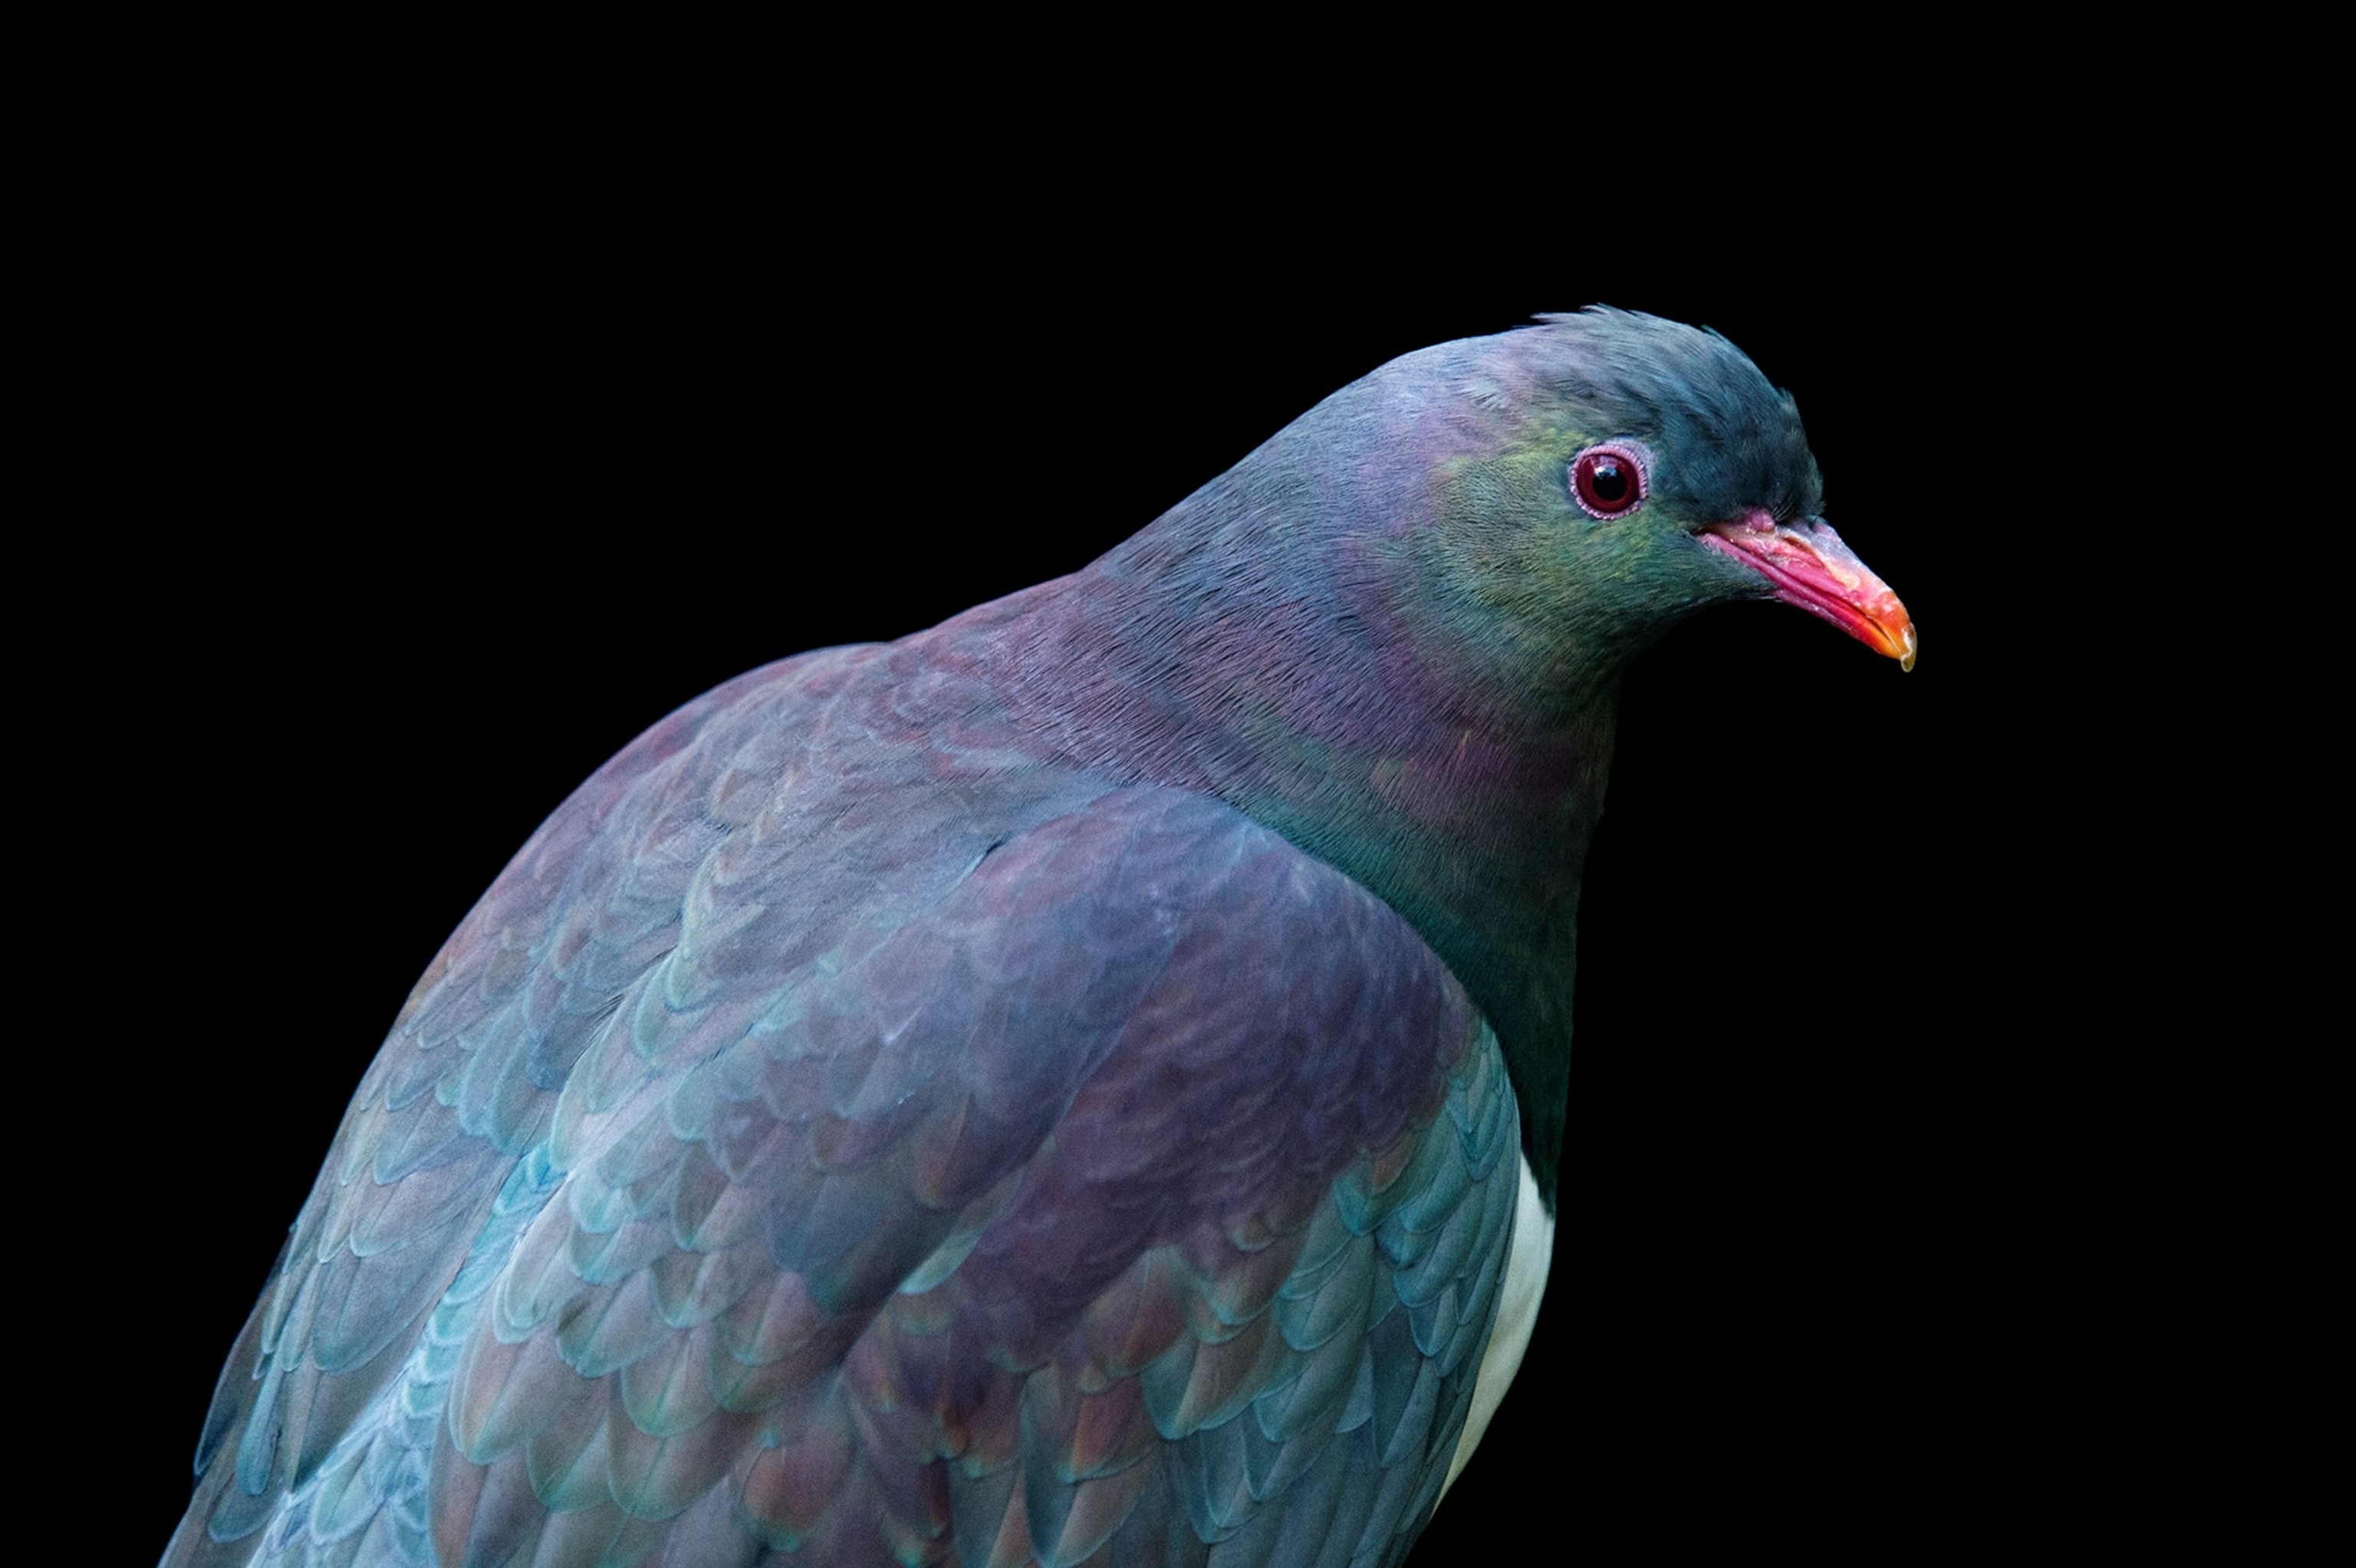 Studio photograph of a New Zealand pigeon